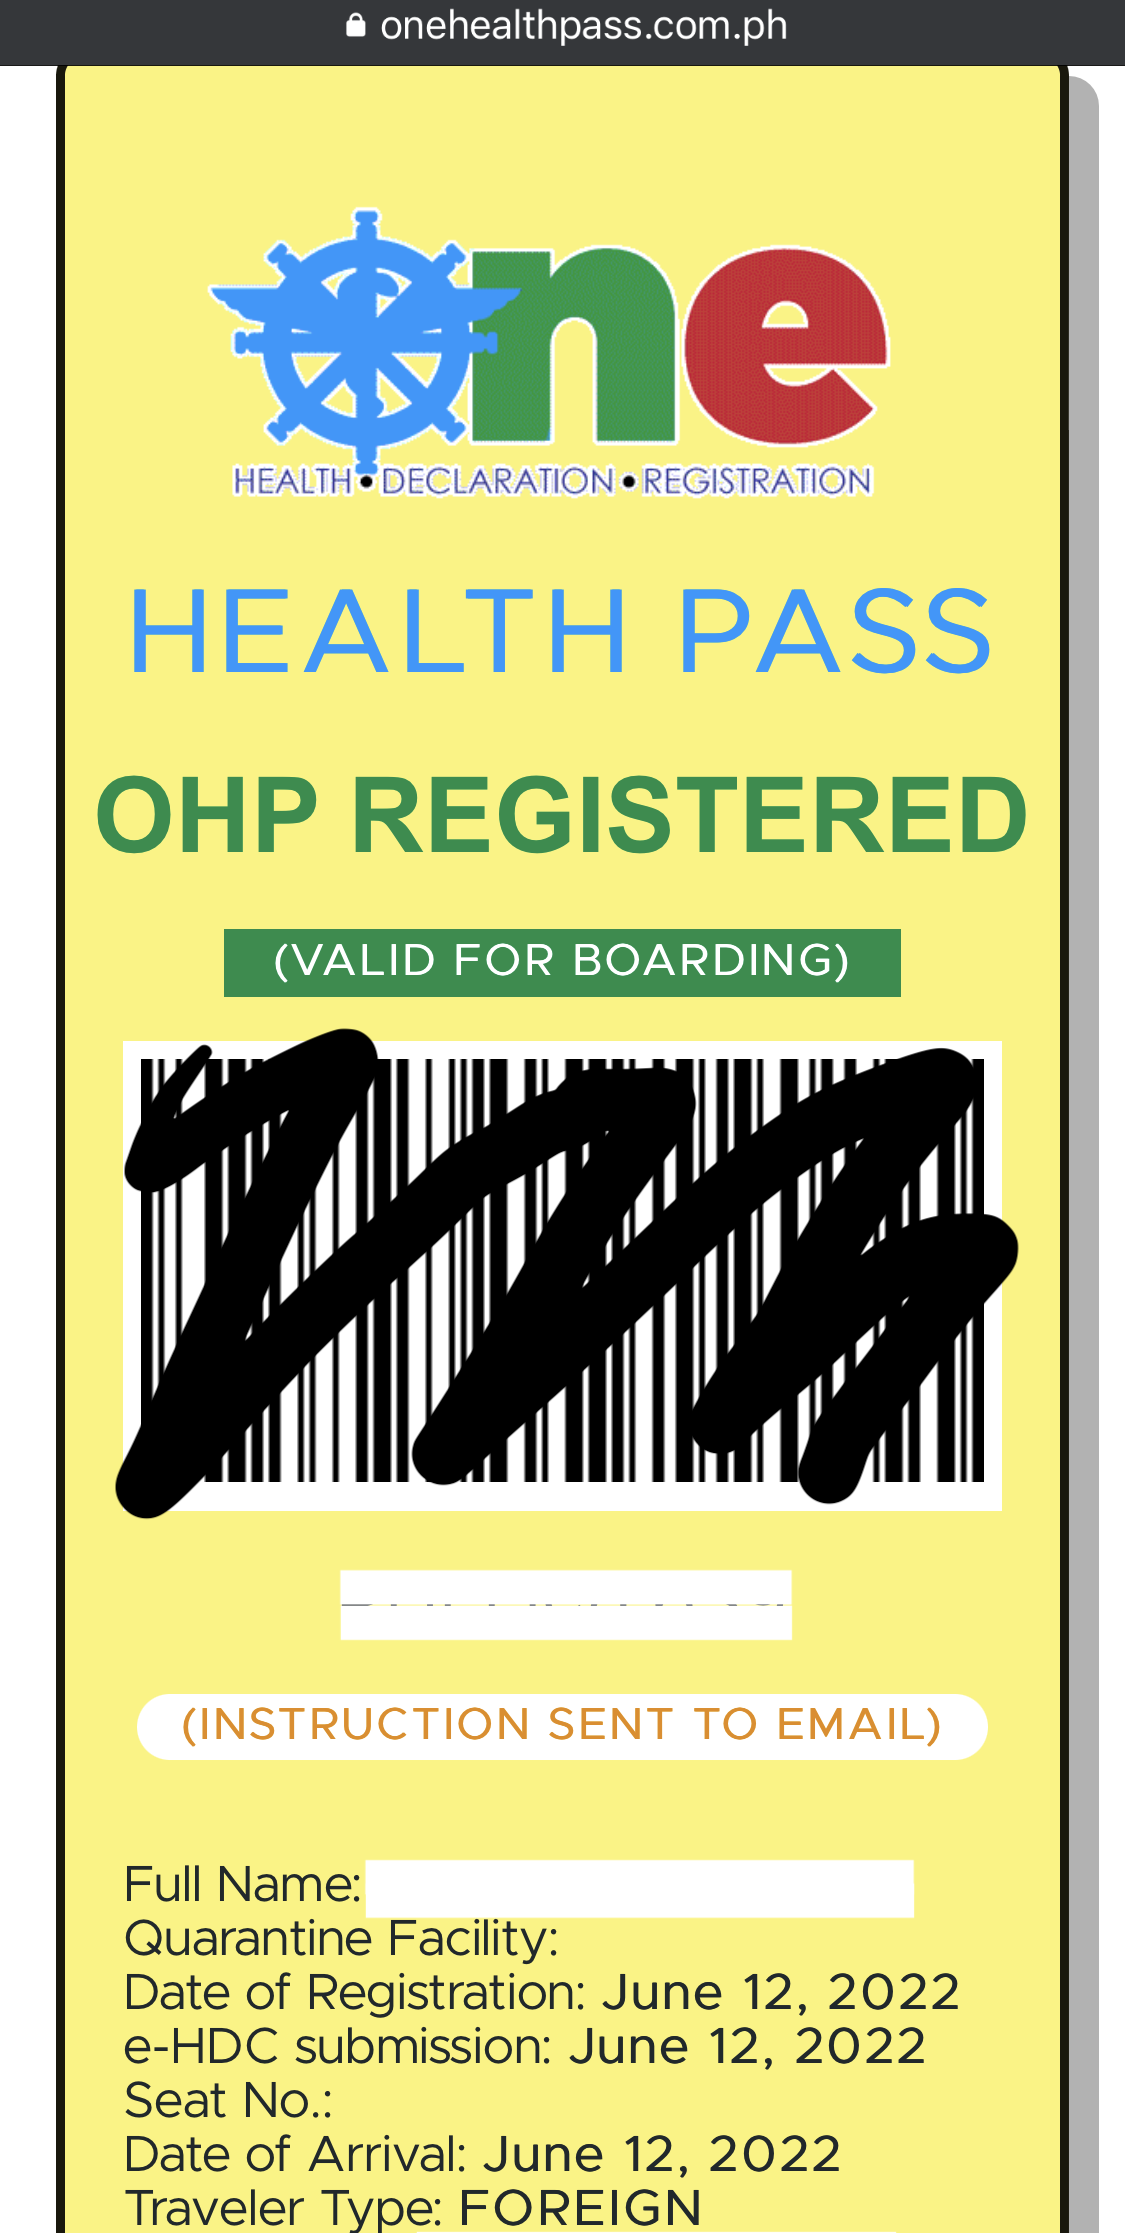 One Health Pass